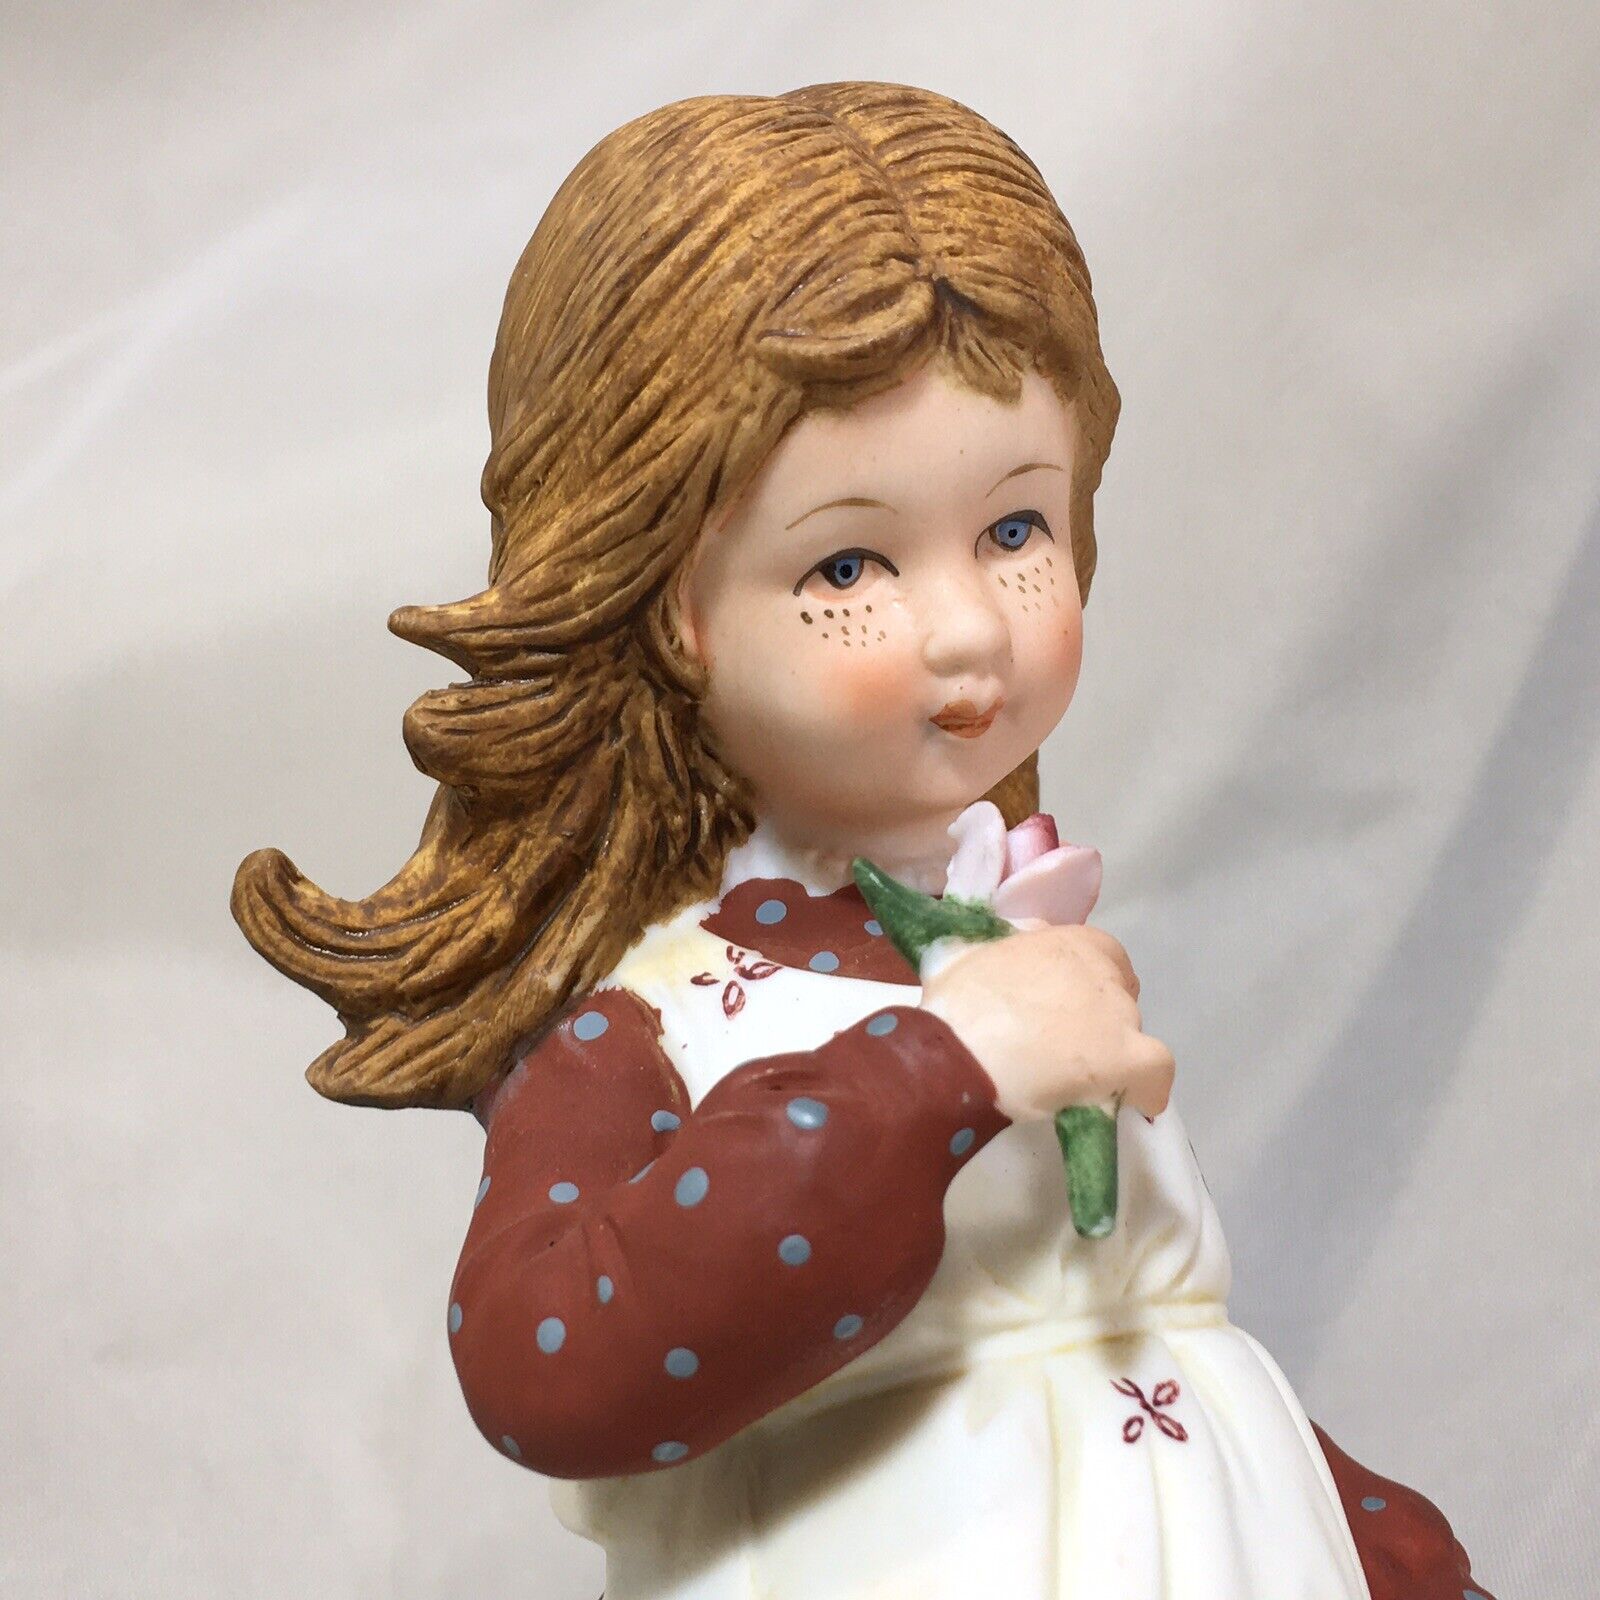 8” Vintage Holly Hobbie Figurine, Porcelain, HHF-3, 70’s, Japan, Collectible❤️